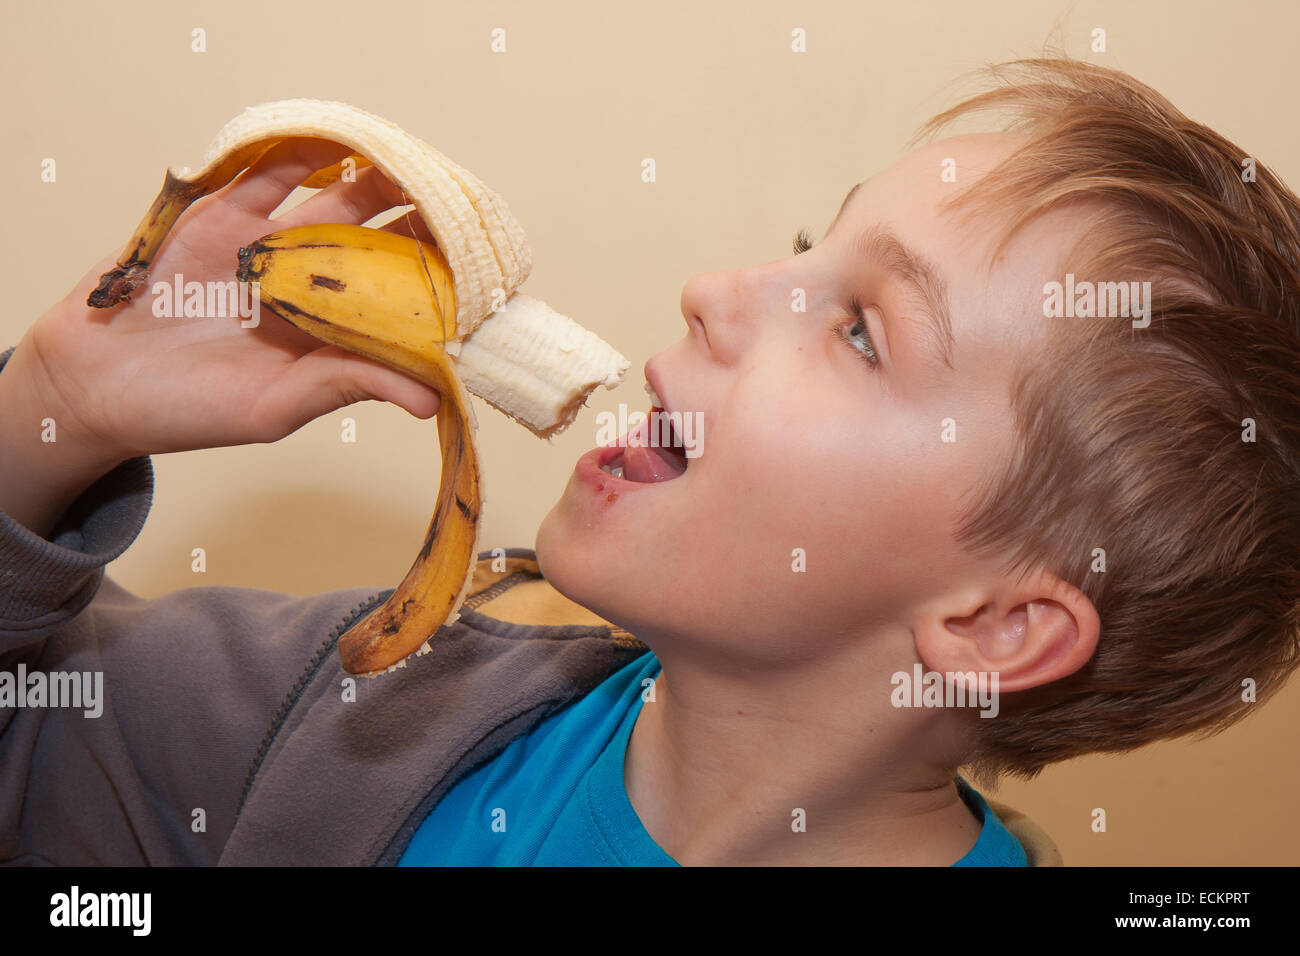 A blond hair boy  eating a banana Stock Photo